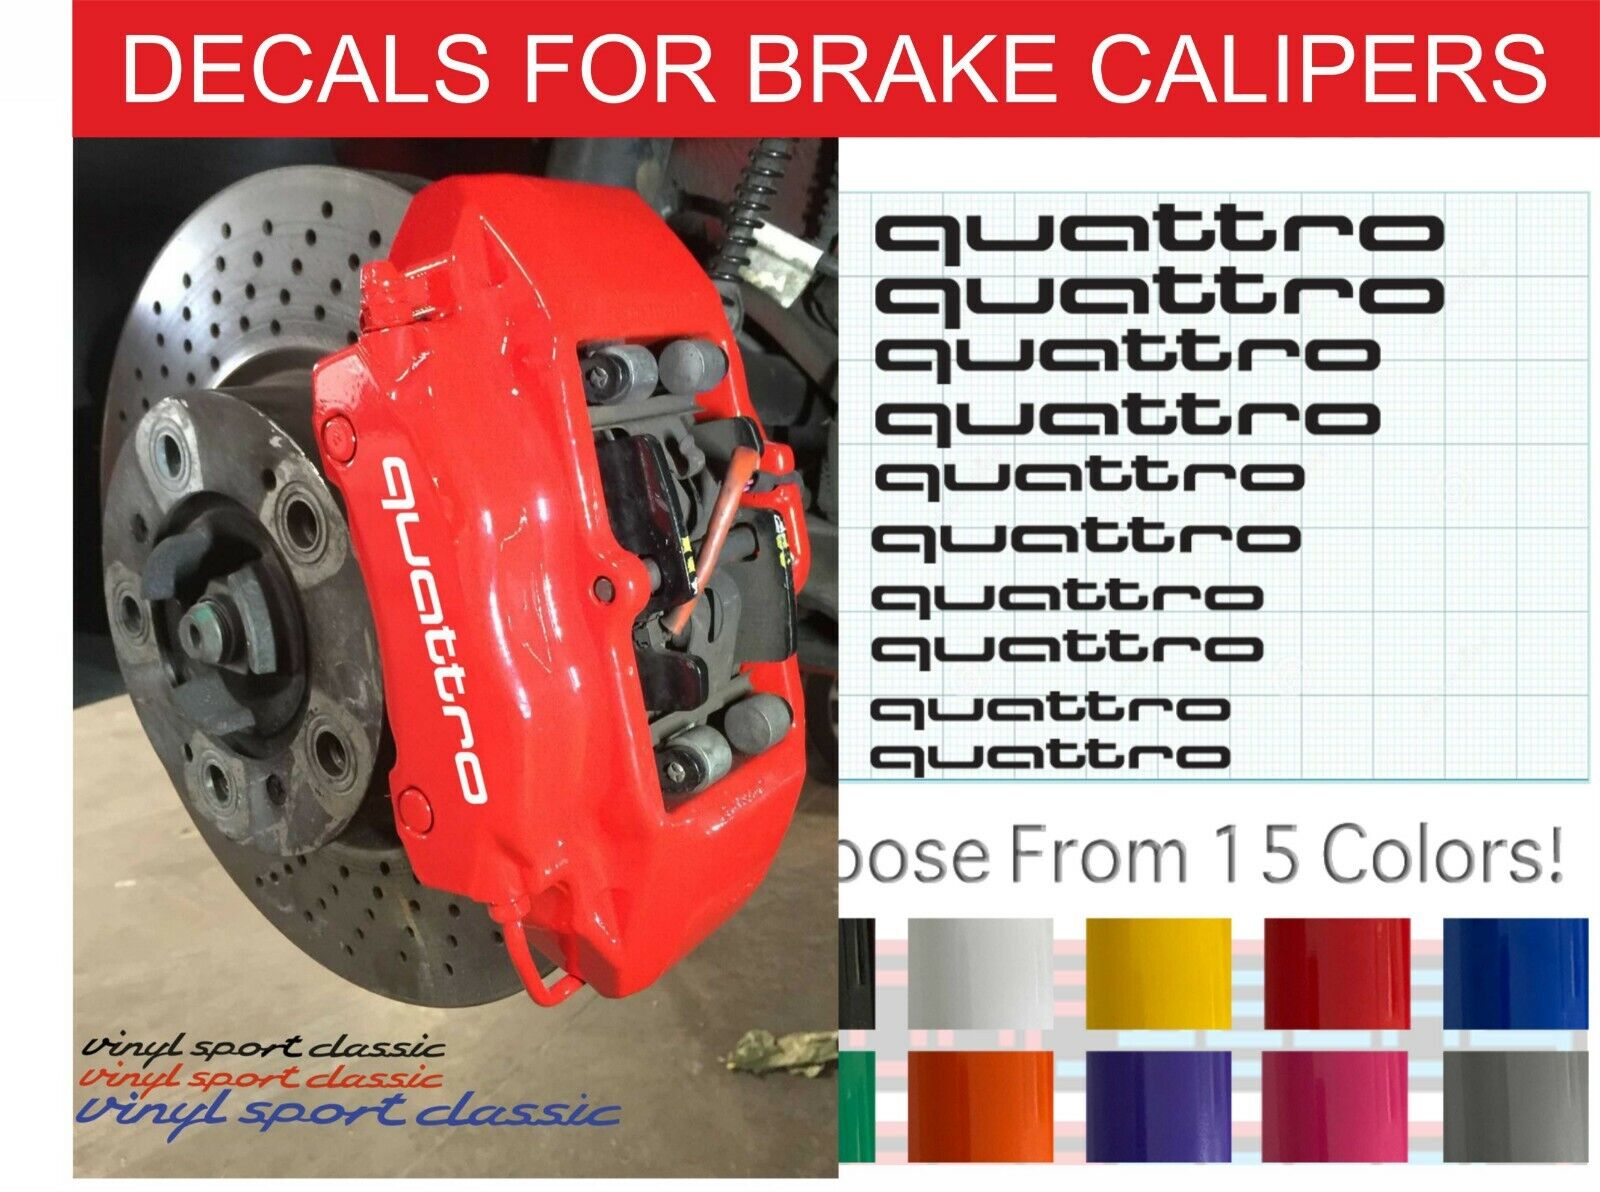 Quattro decals stickers for brake calipers emblem red WHITE PREMIUM audi a4 a6